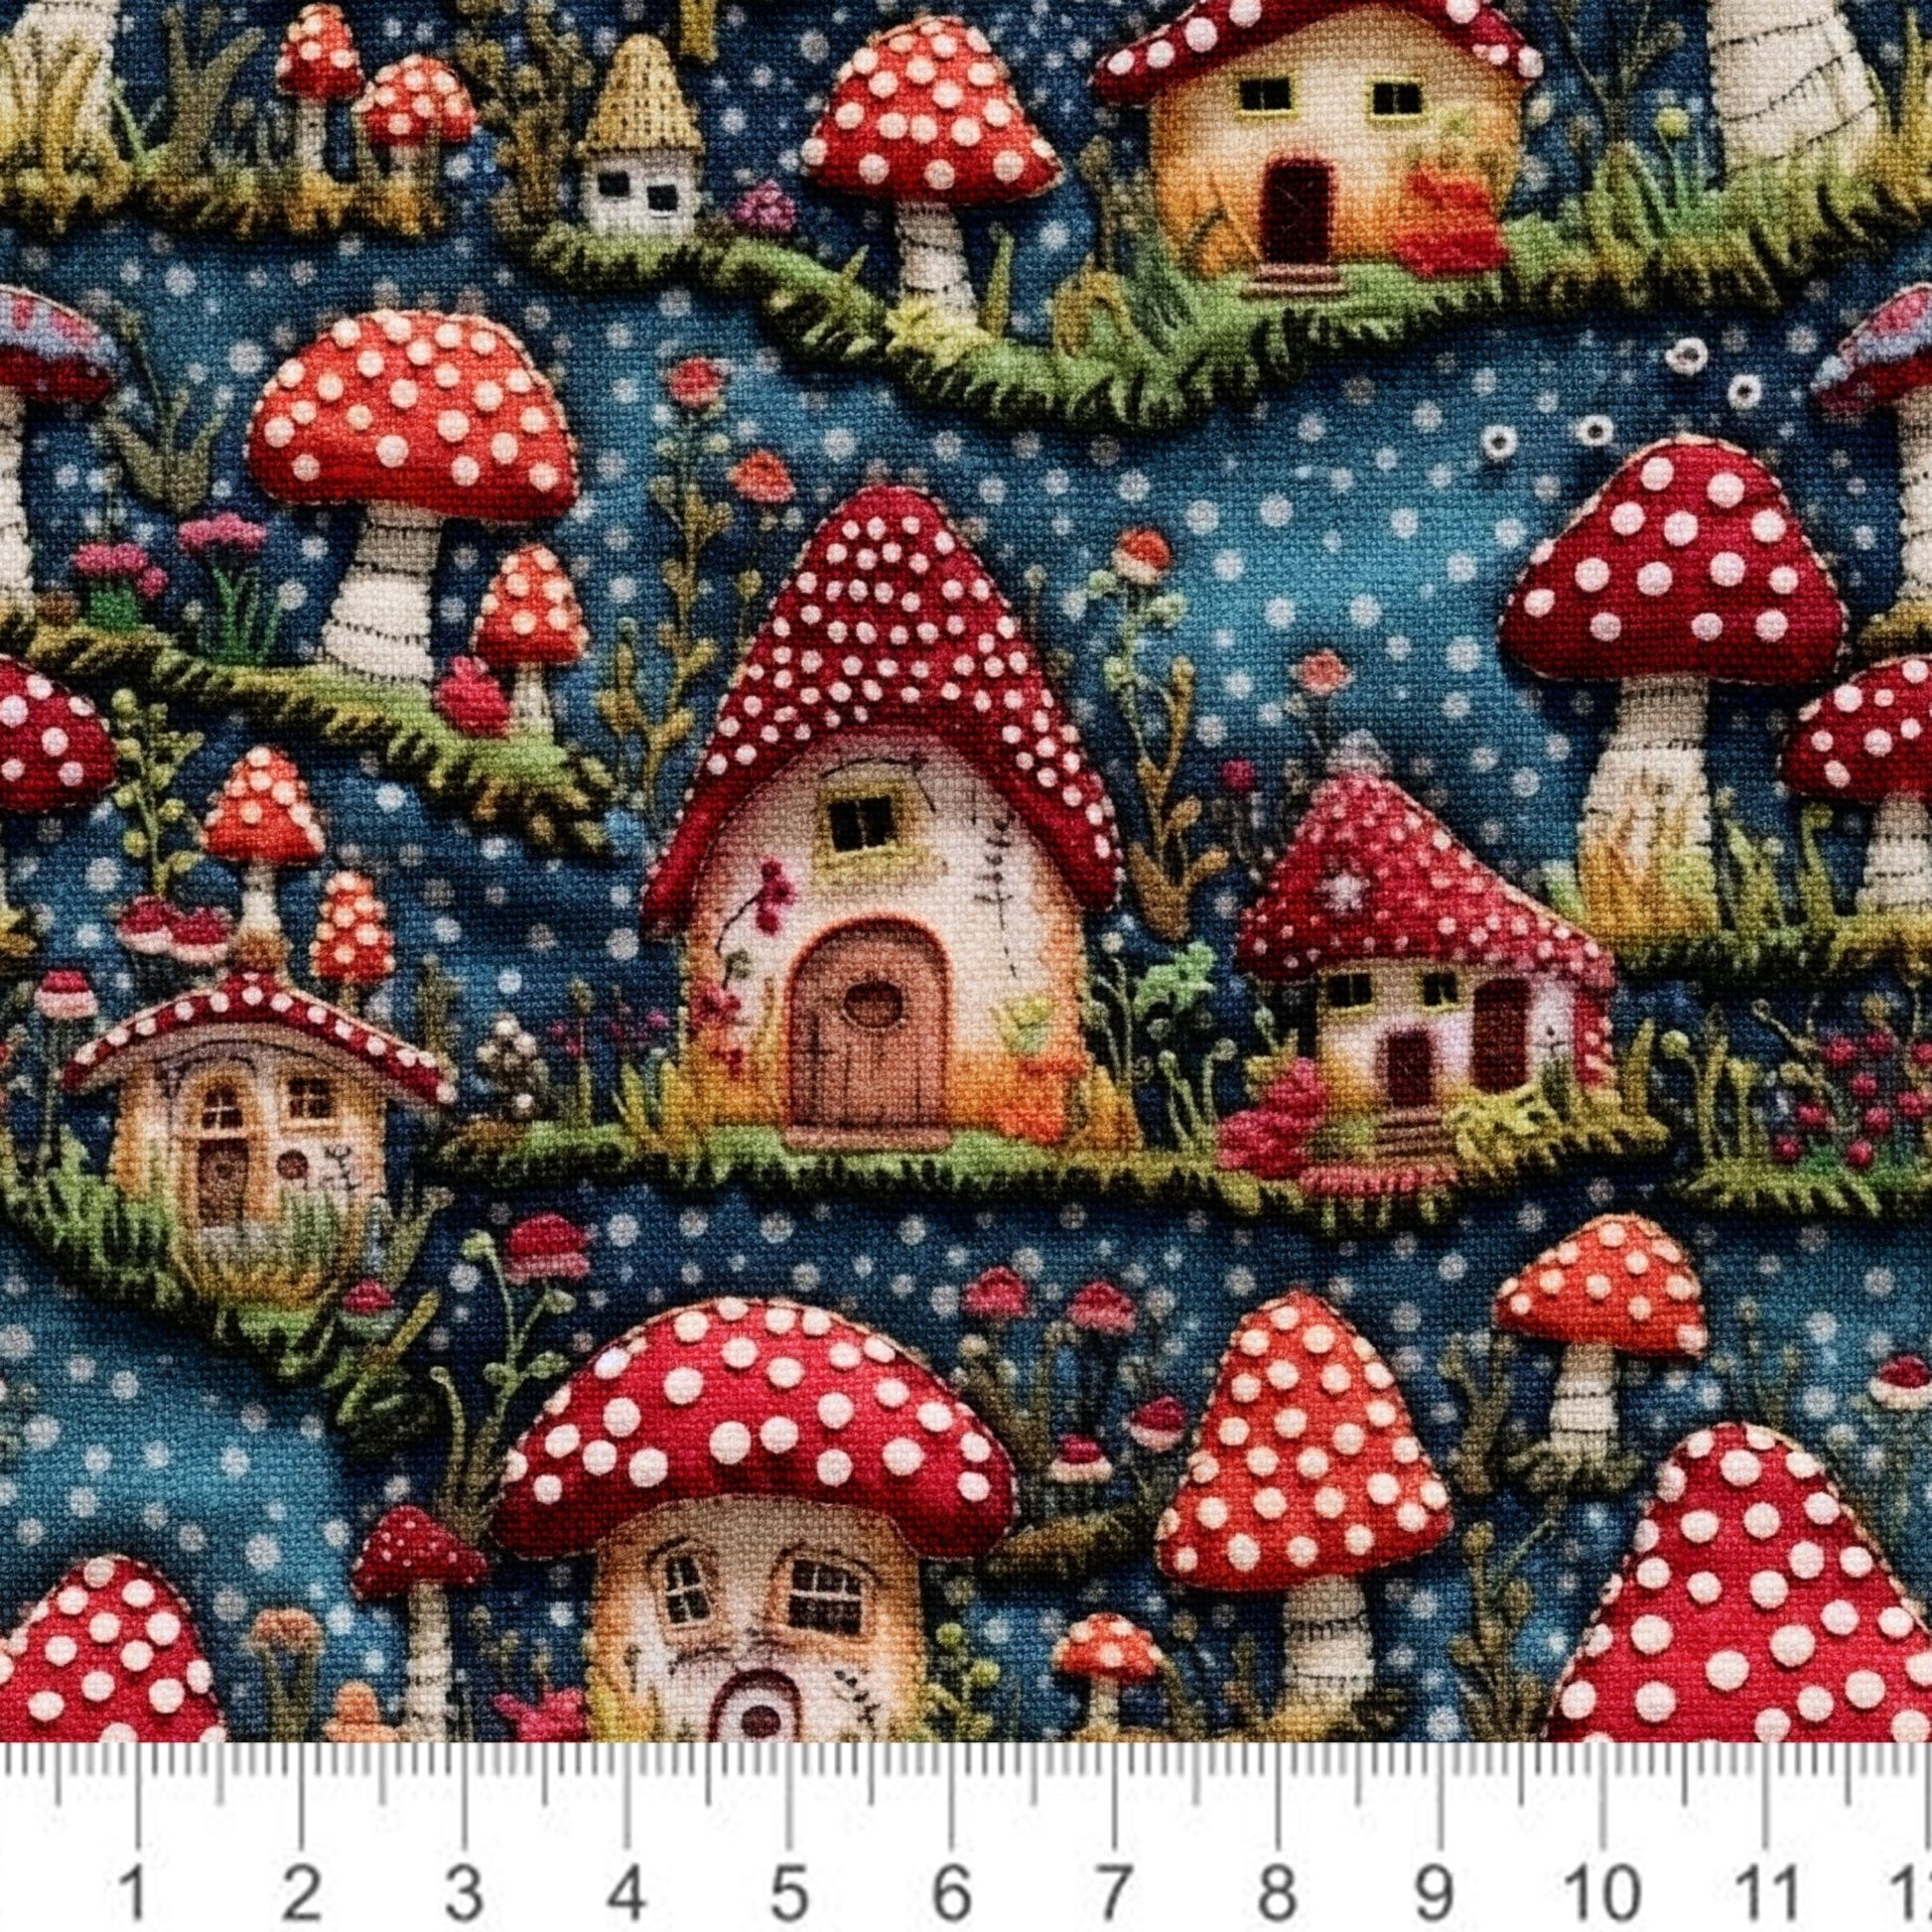 Raspberry Pattern Co - Red Mushroom Houses - Little Rhody Sewing Co.